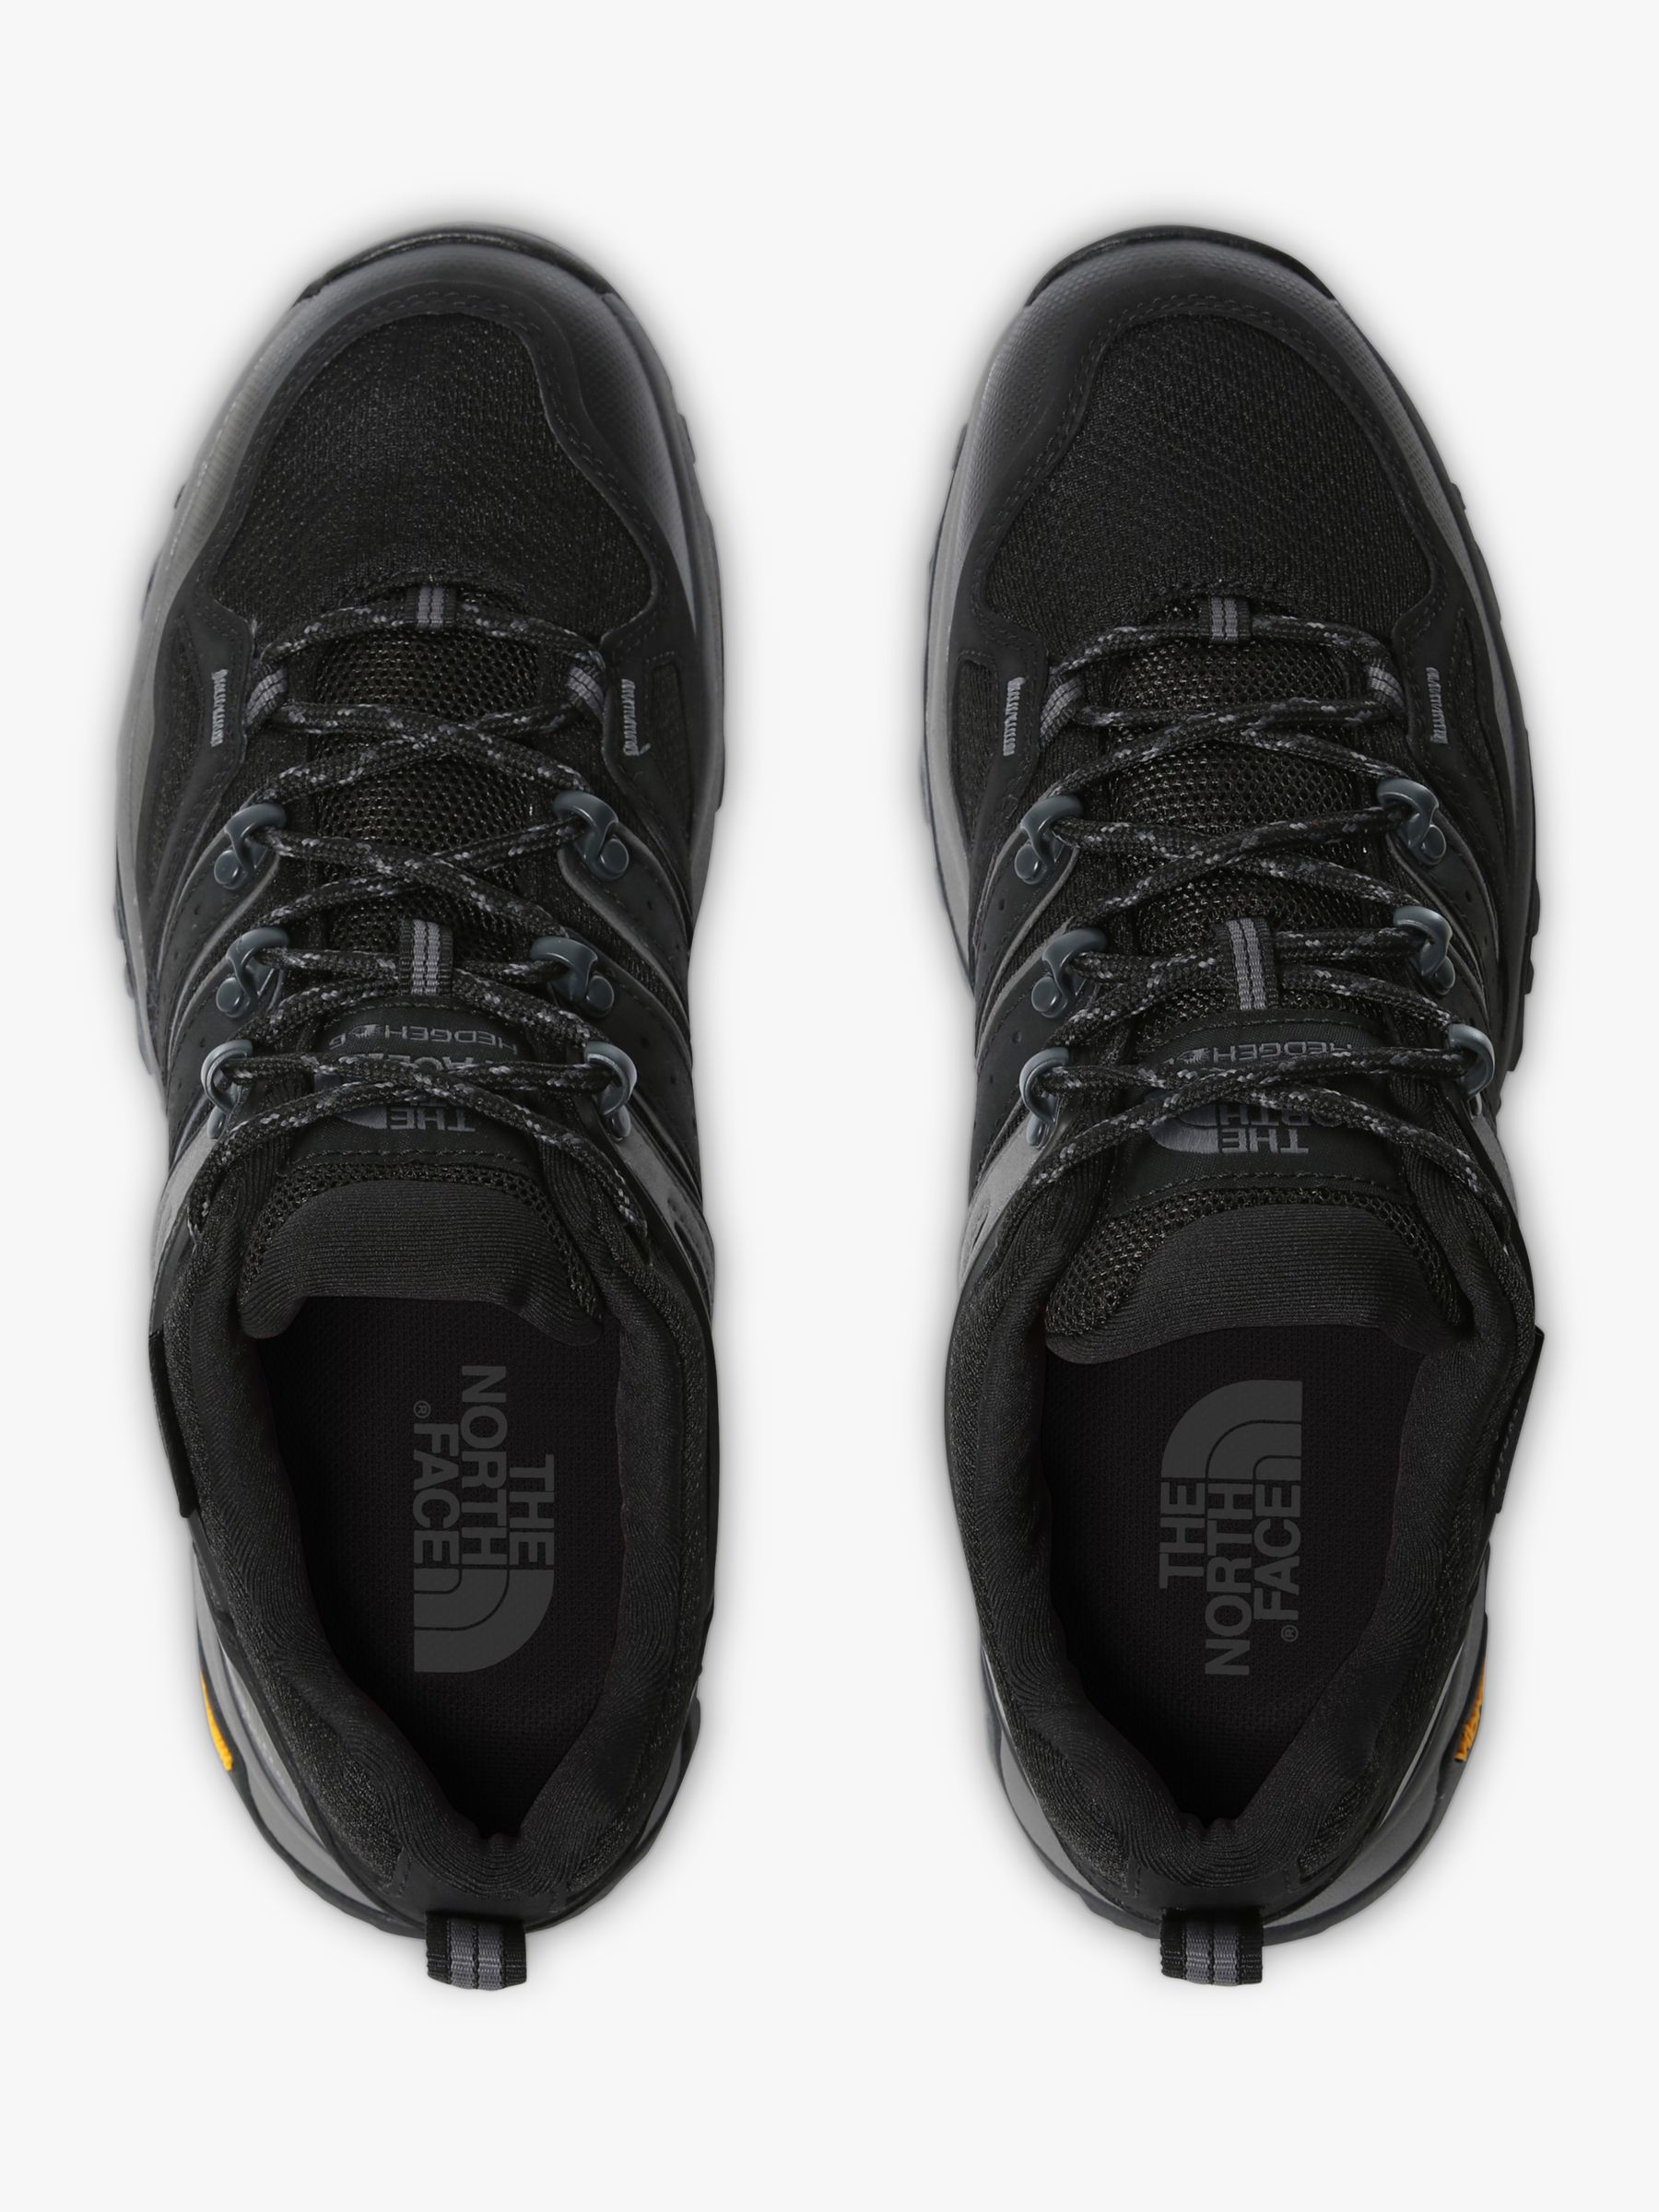 The North Face Hedgehog Futurelight Hiking Shoes, Black/Zinc Grey, 9